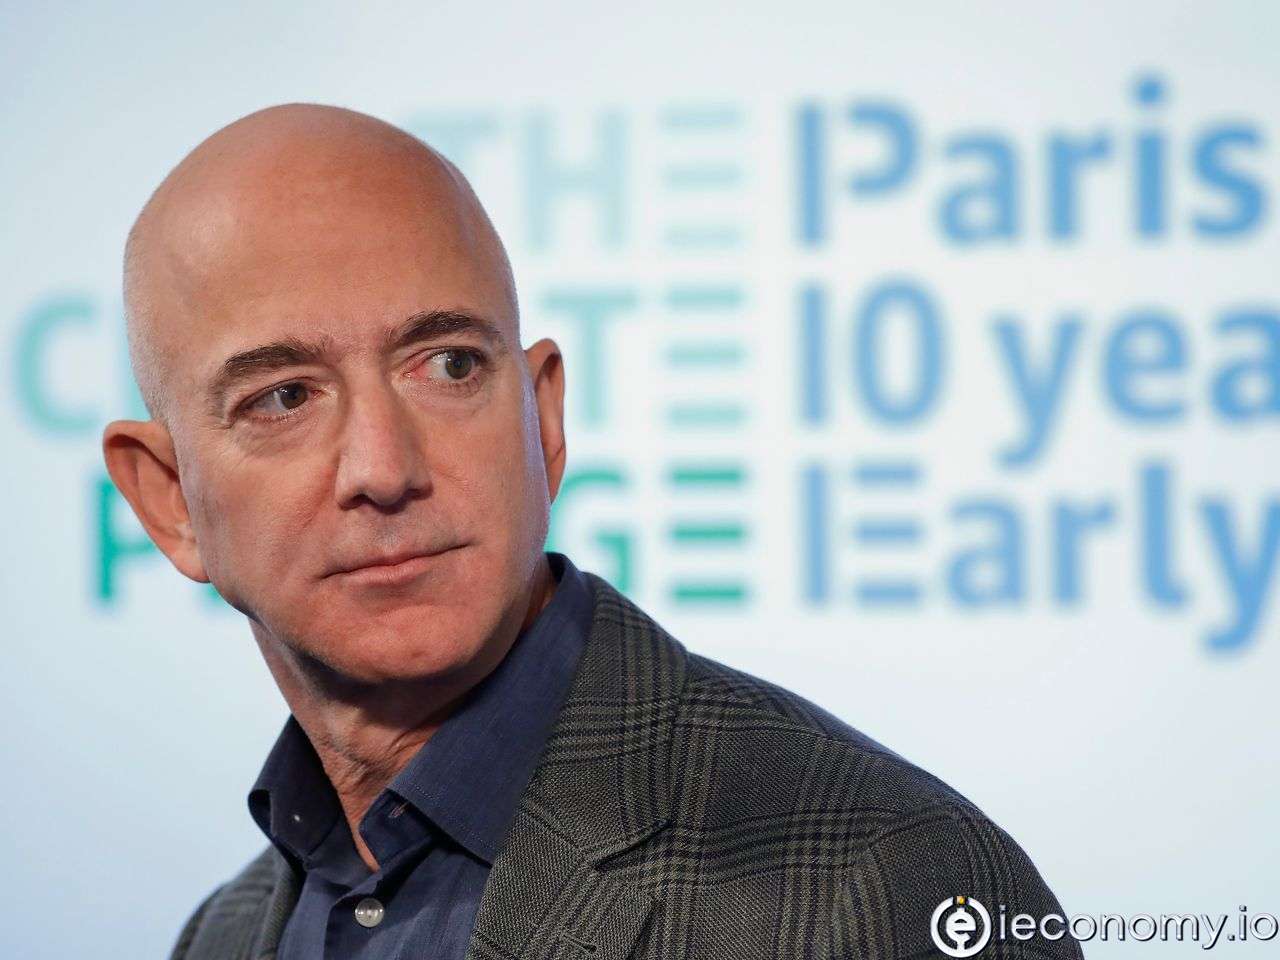 Jeff Bezos sells millions of Amazon shares